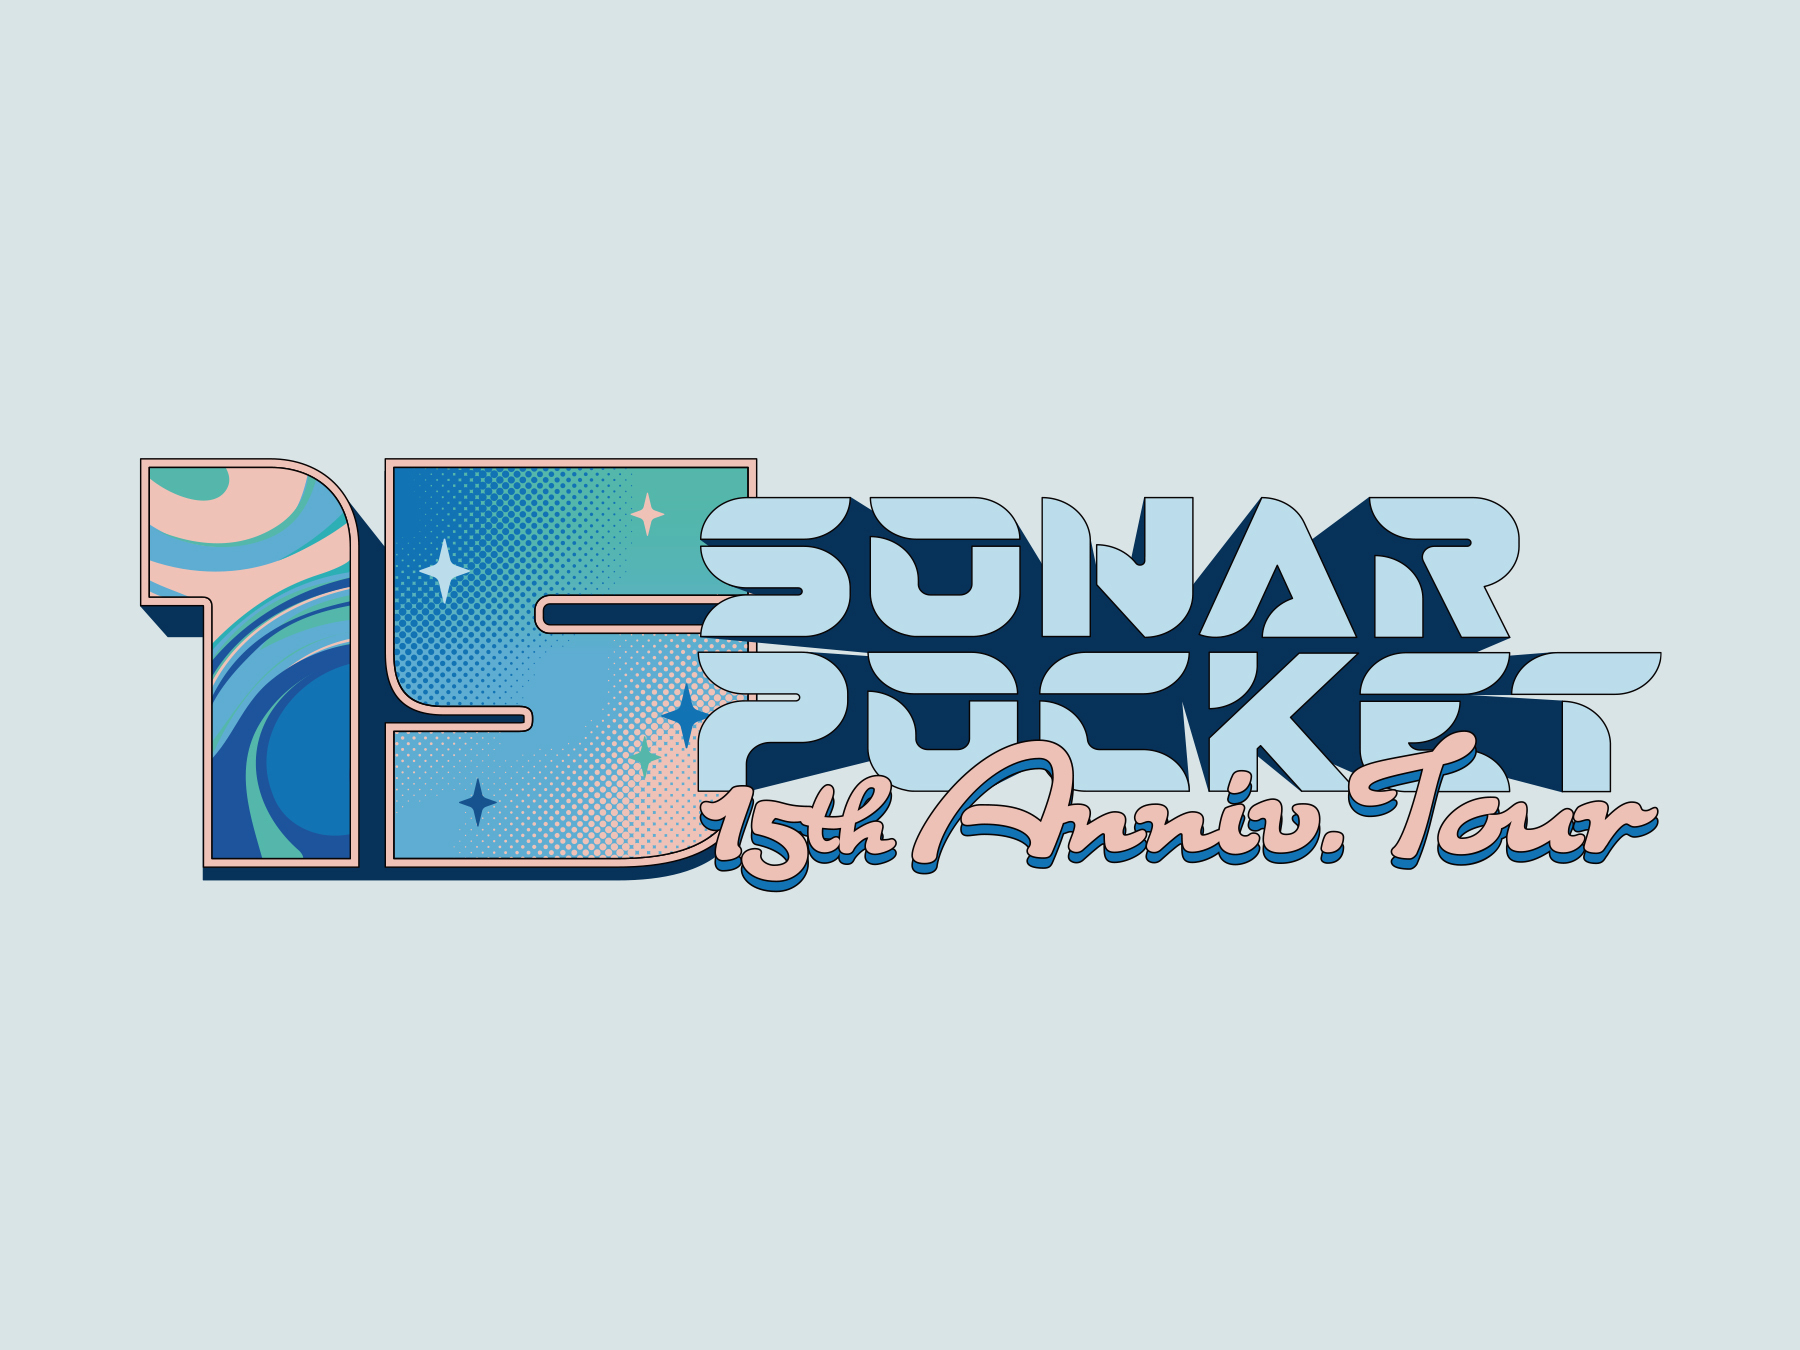 Sonar Pocket 15th Anniversary Tour